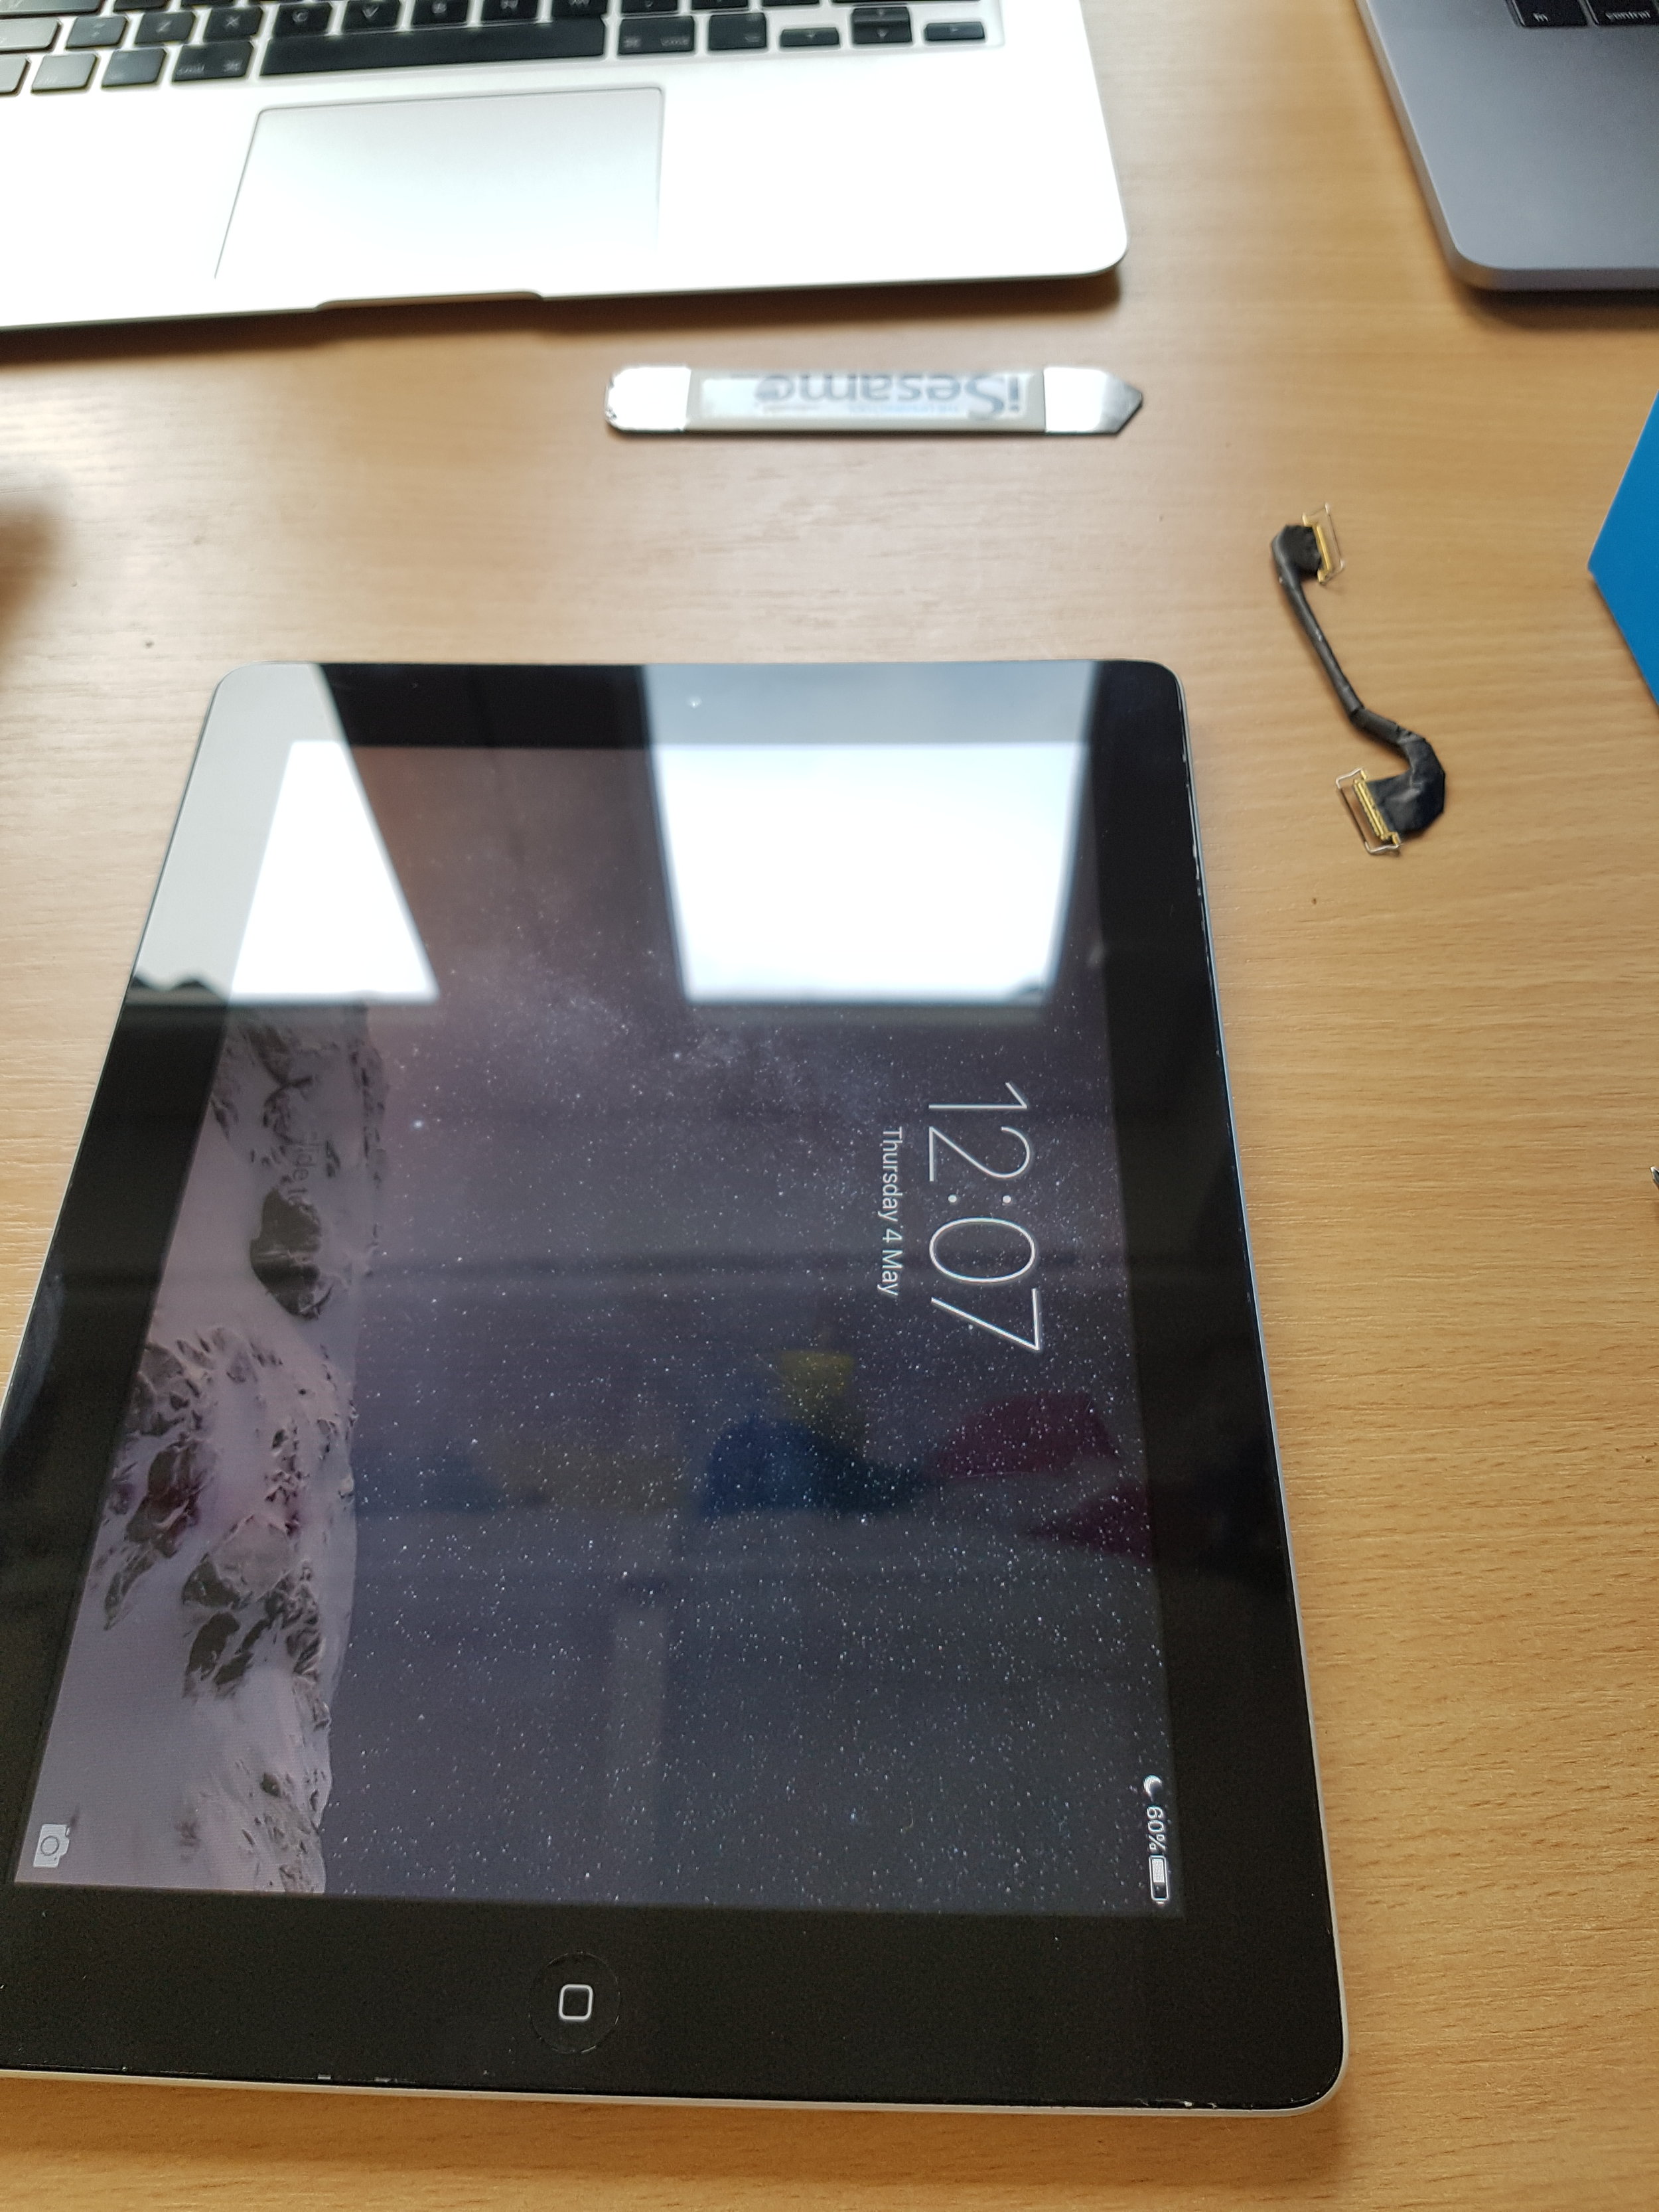 iPad 2 After Repair